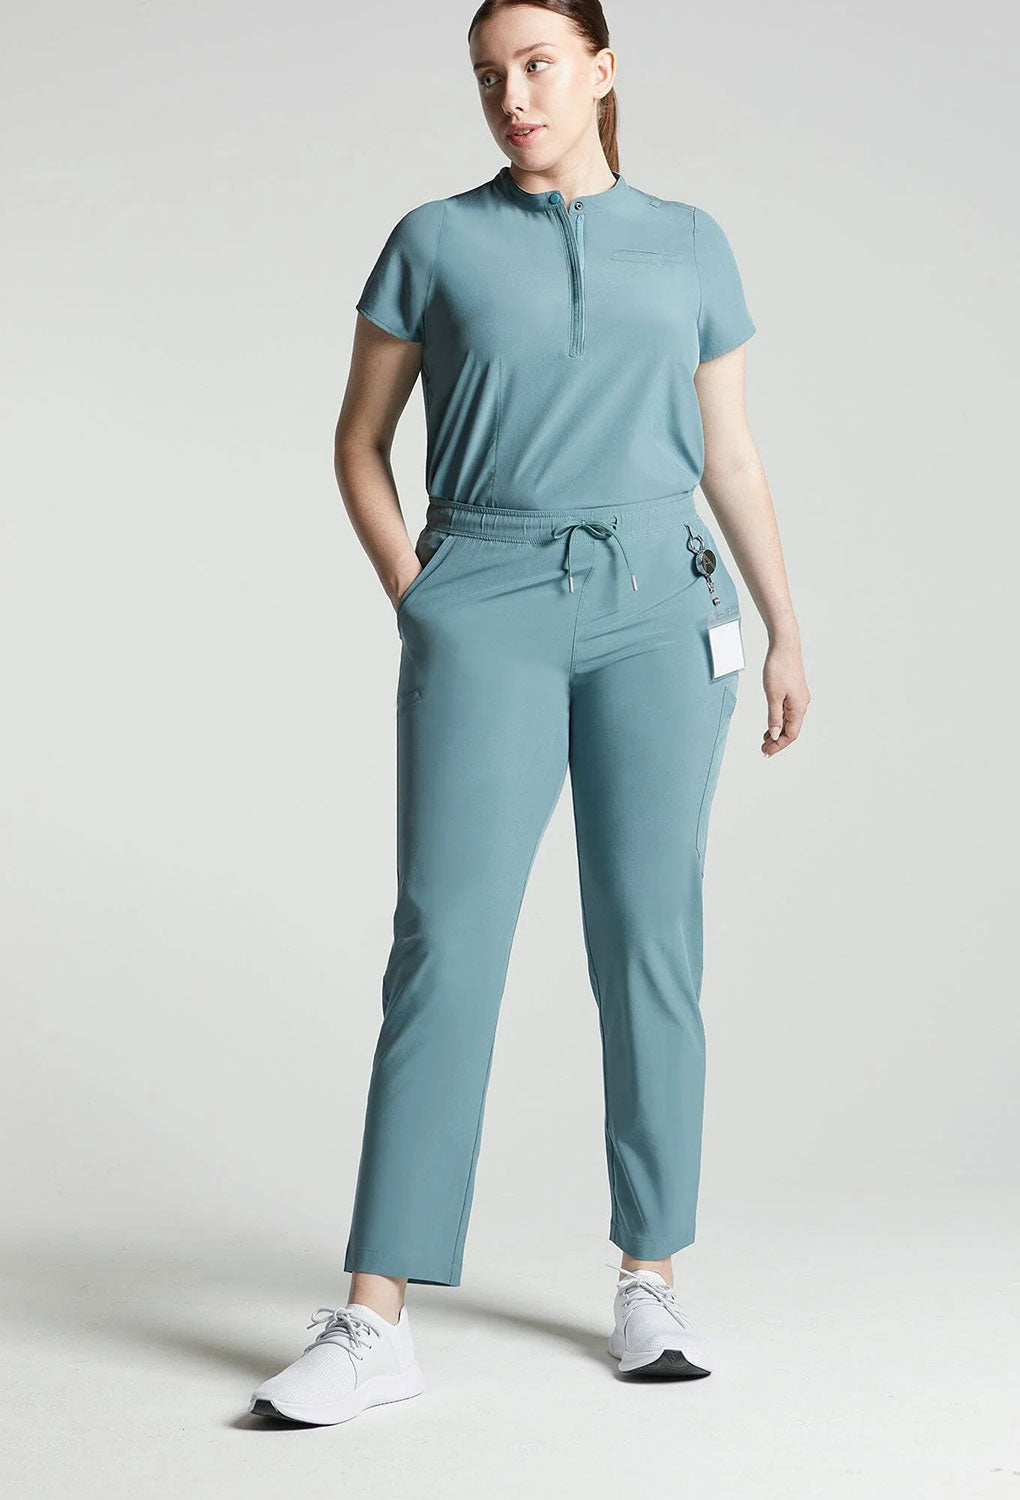 Where to Buy Grey's Anatomy Scrubs Pants, Top Online